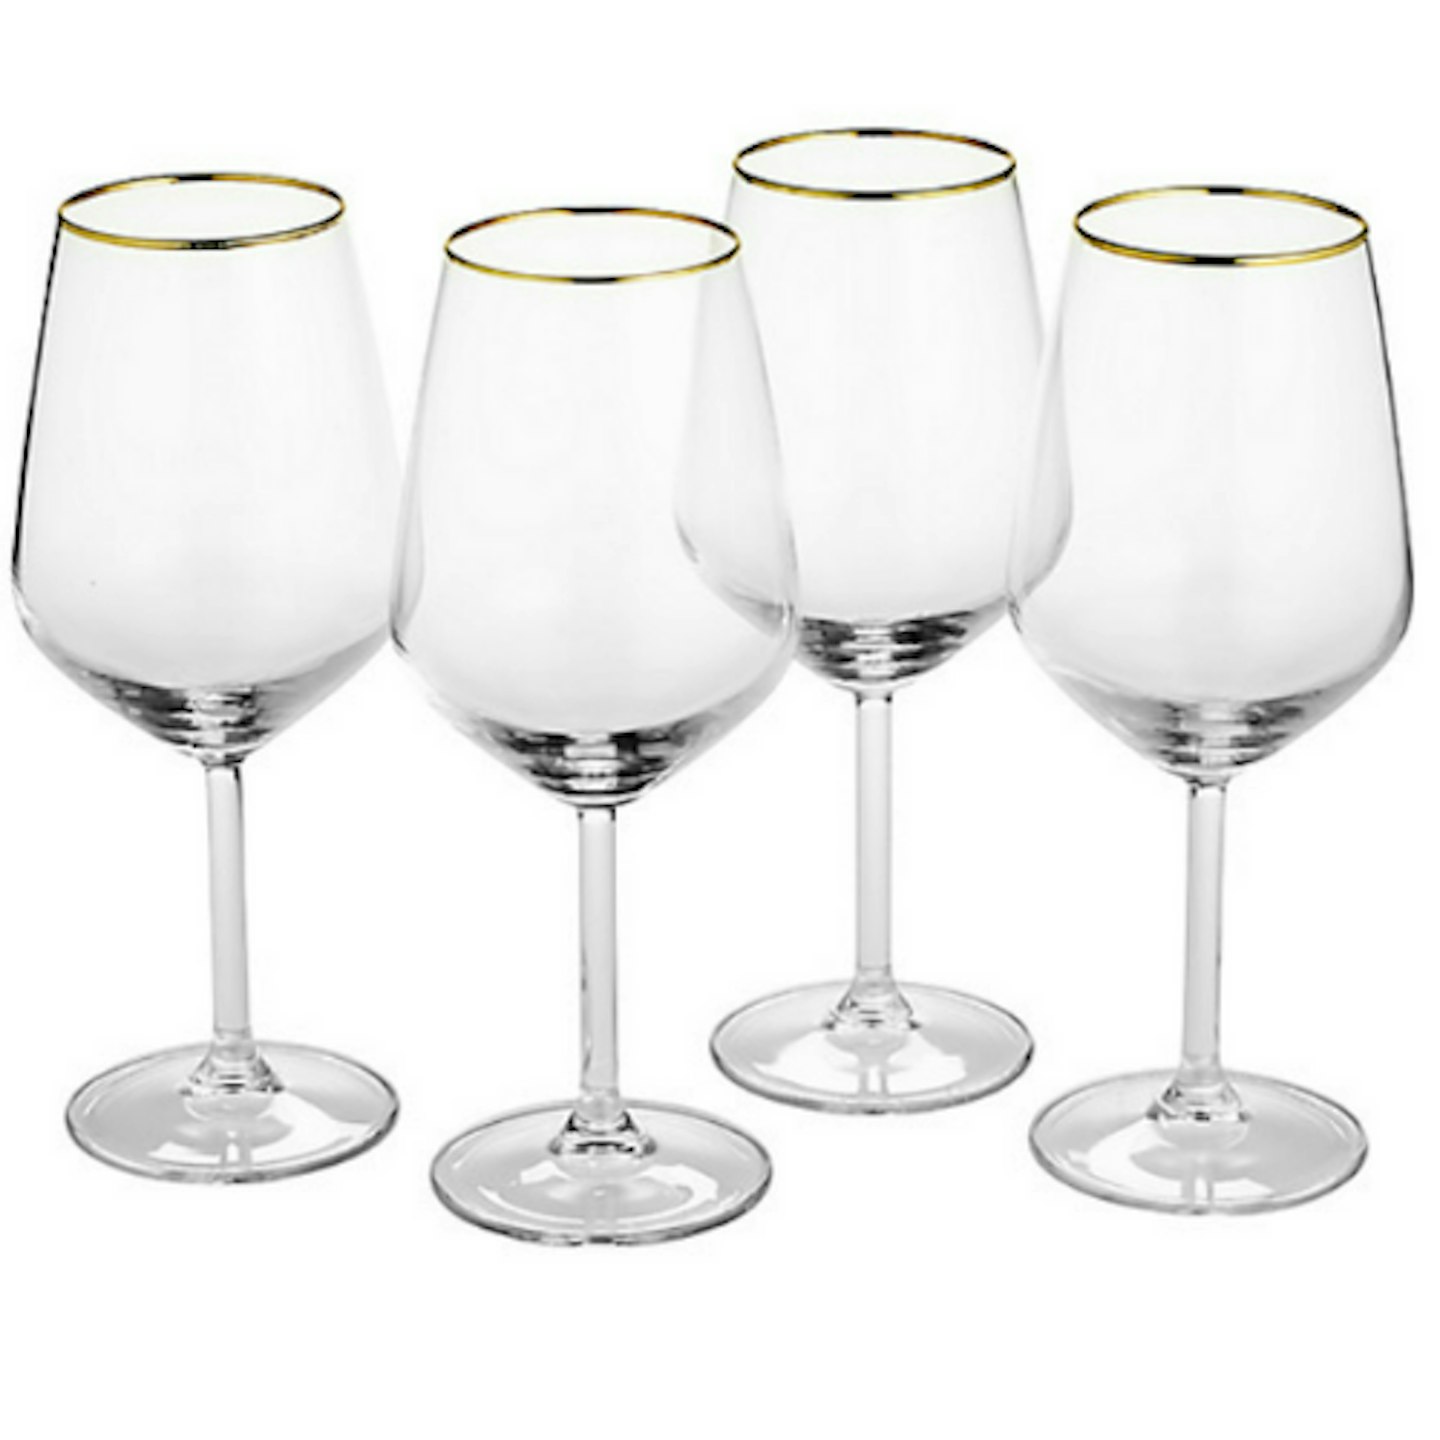 Glassware: 4 Lakeland Gold Rim Wine Glasses